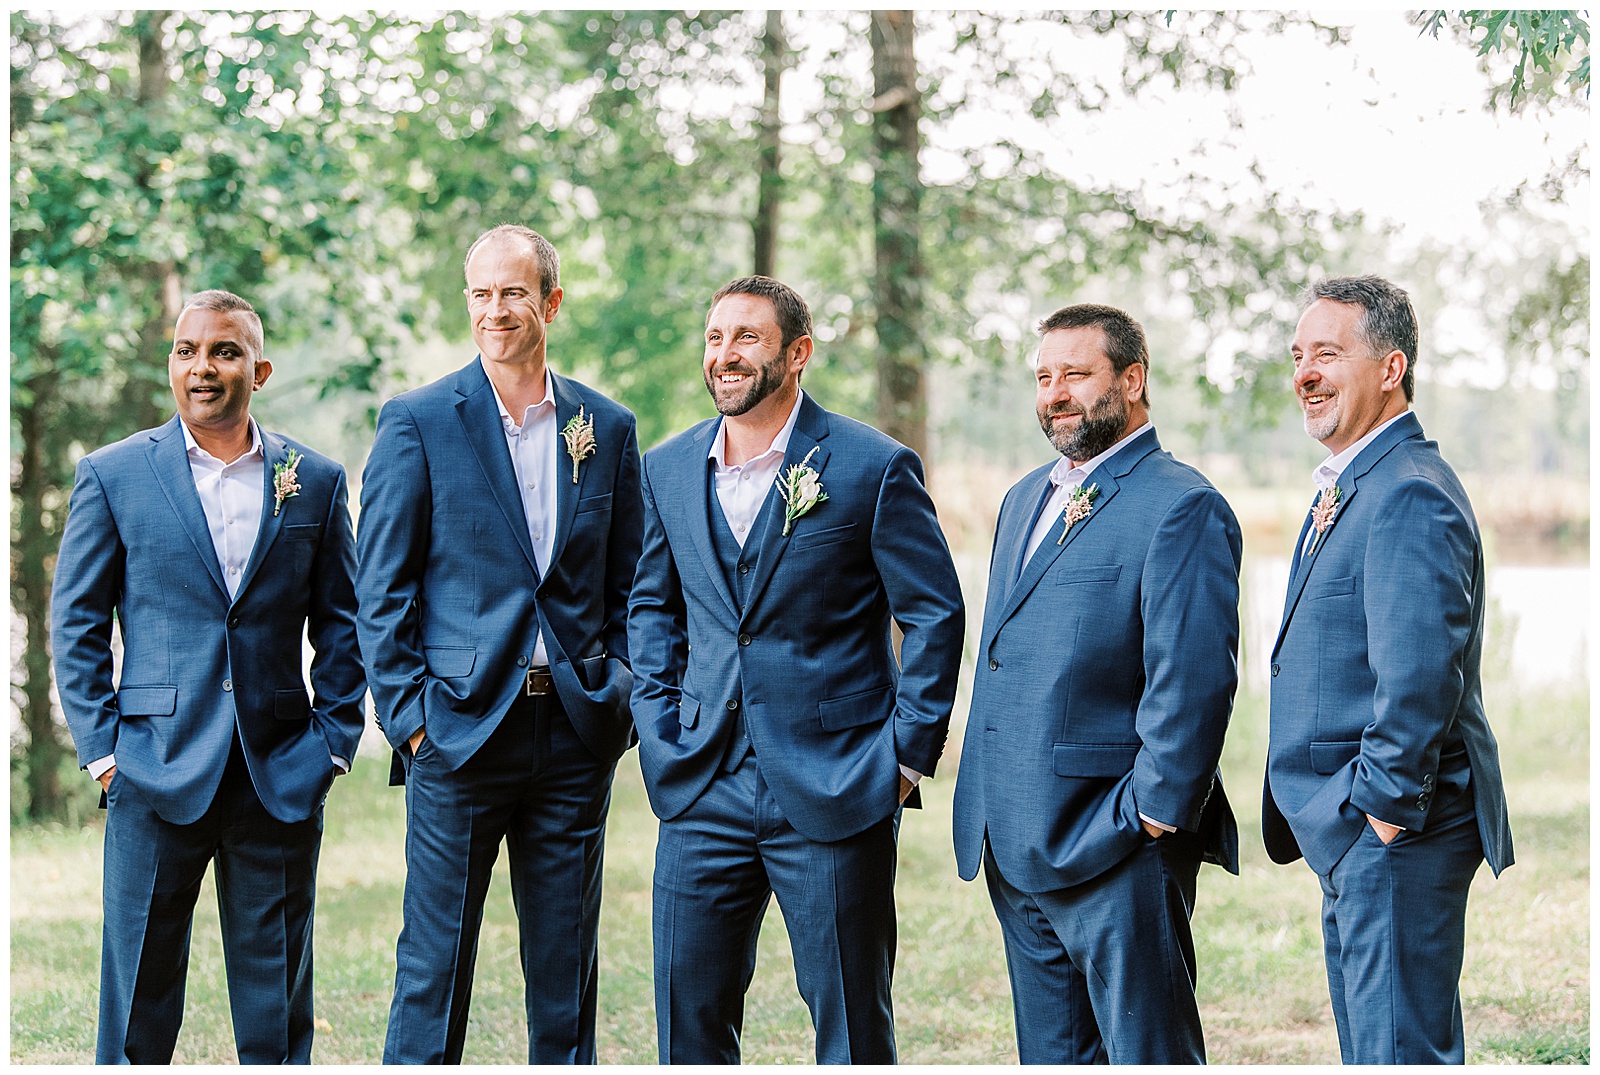 groomsmen group portrait in navy blue suits